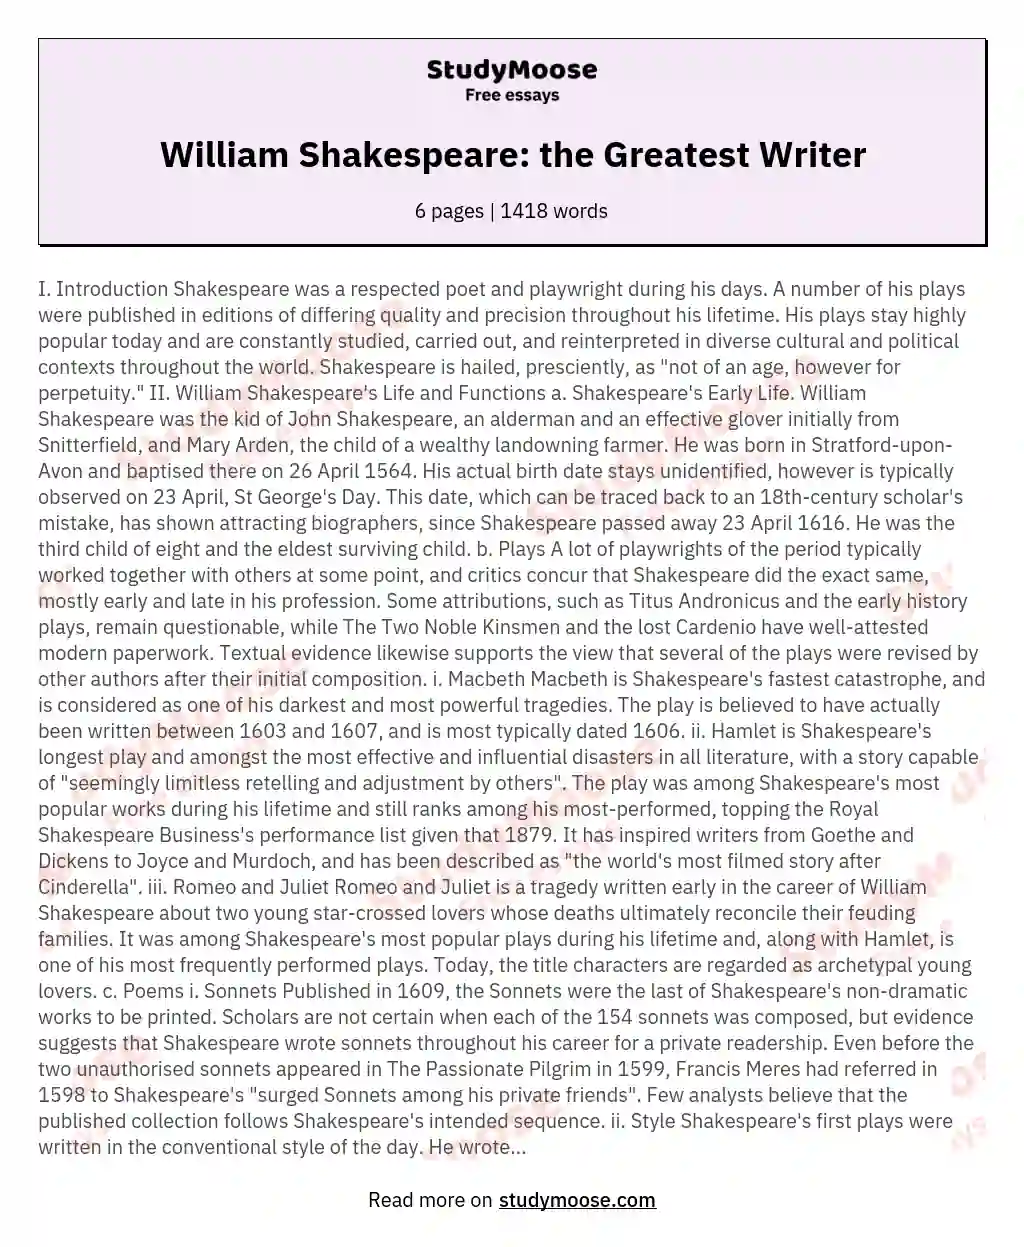 William Shakespeare: the Greatest Writer essay